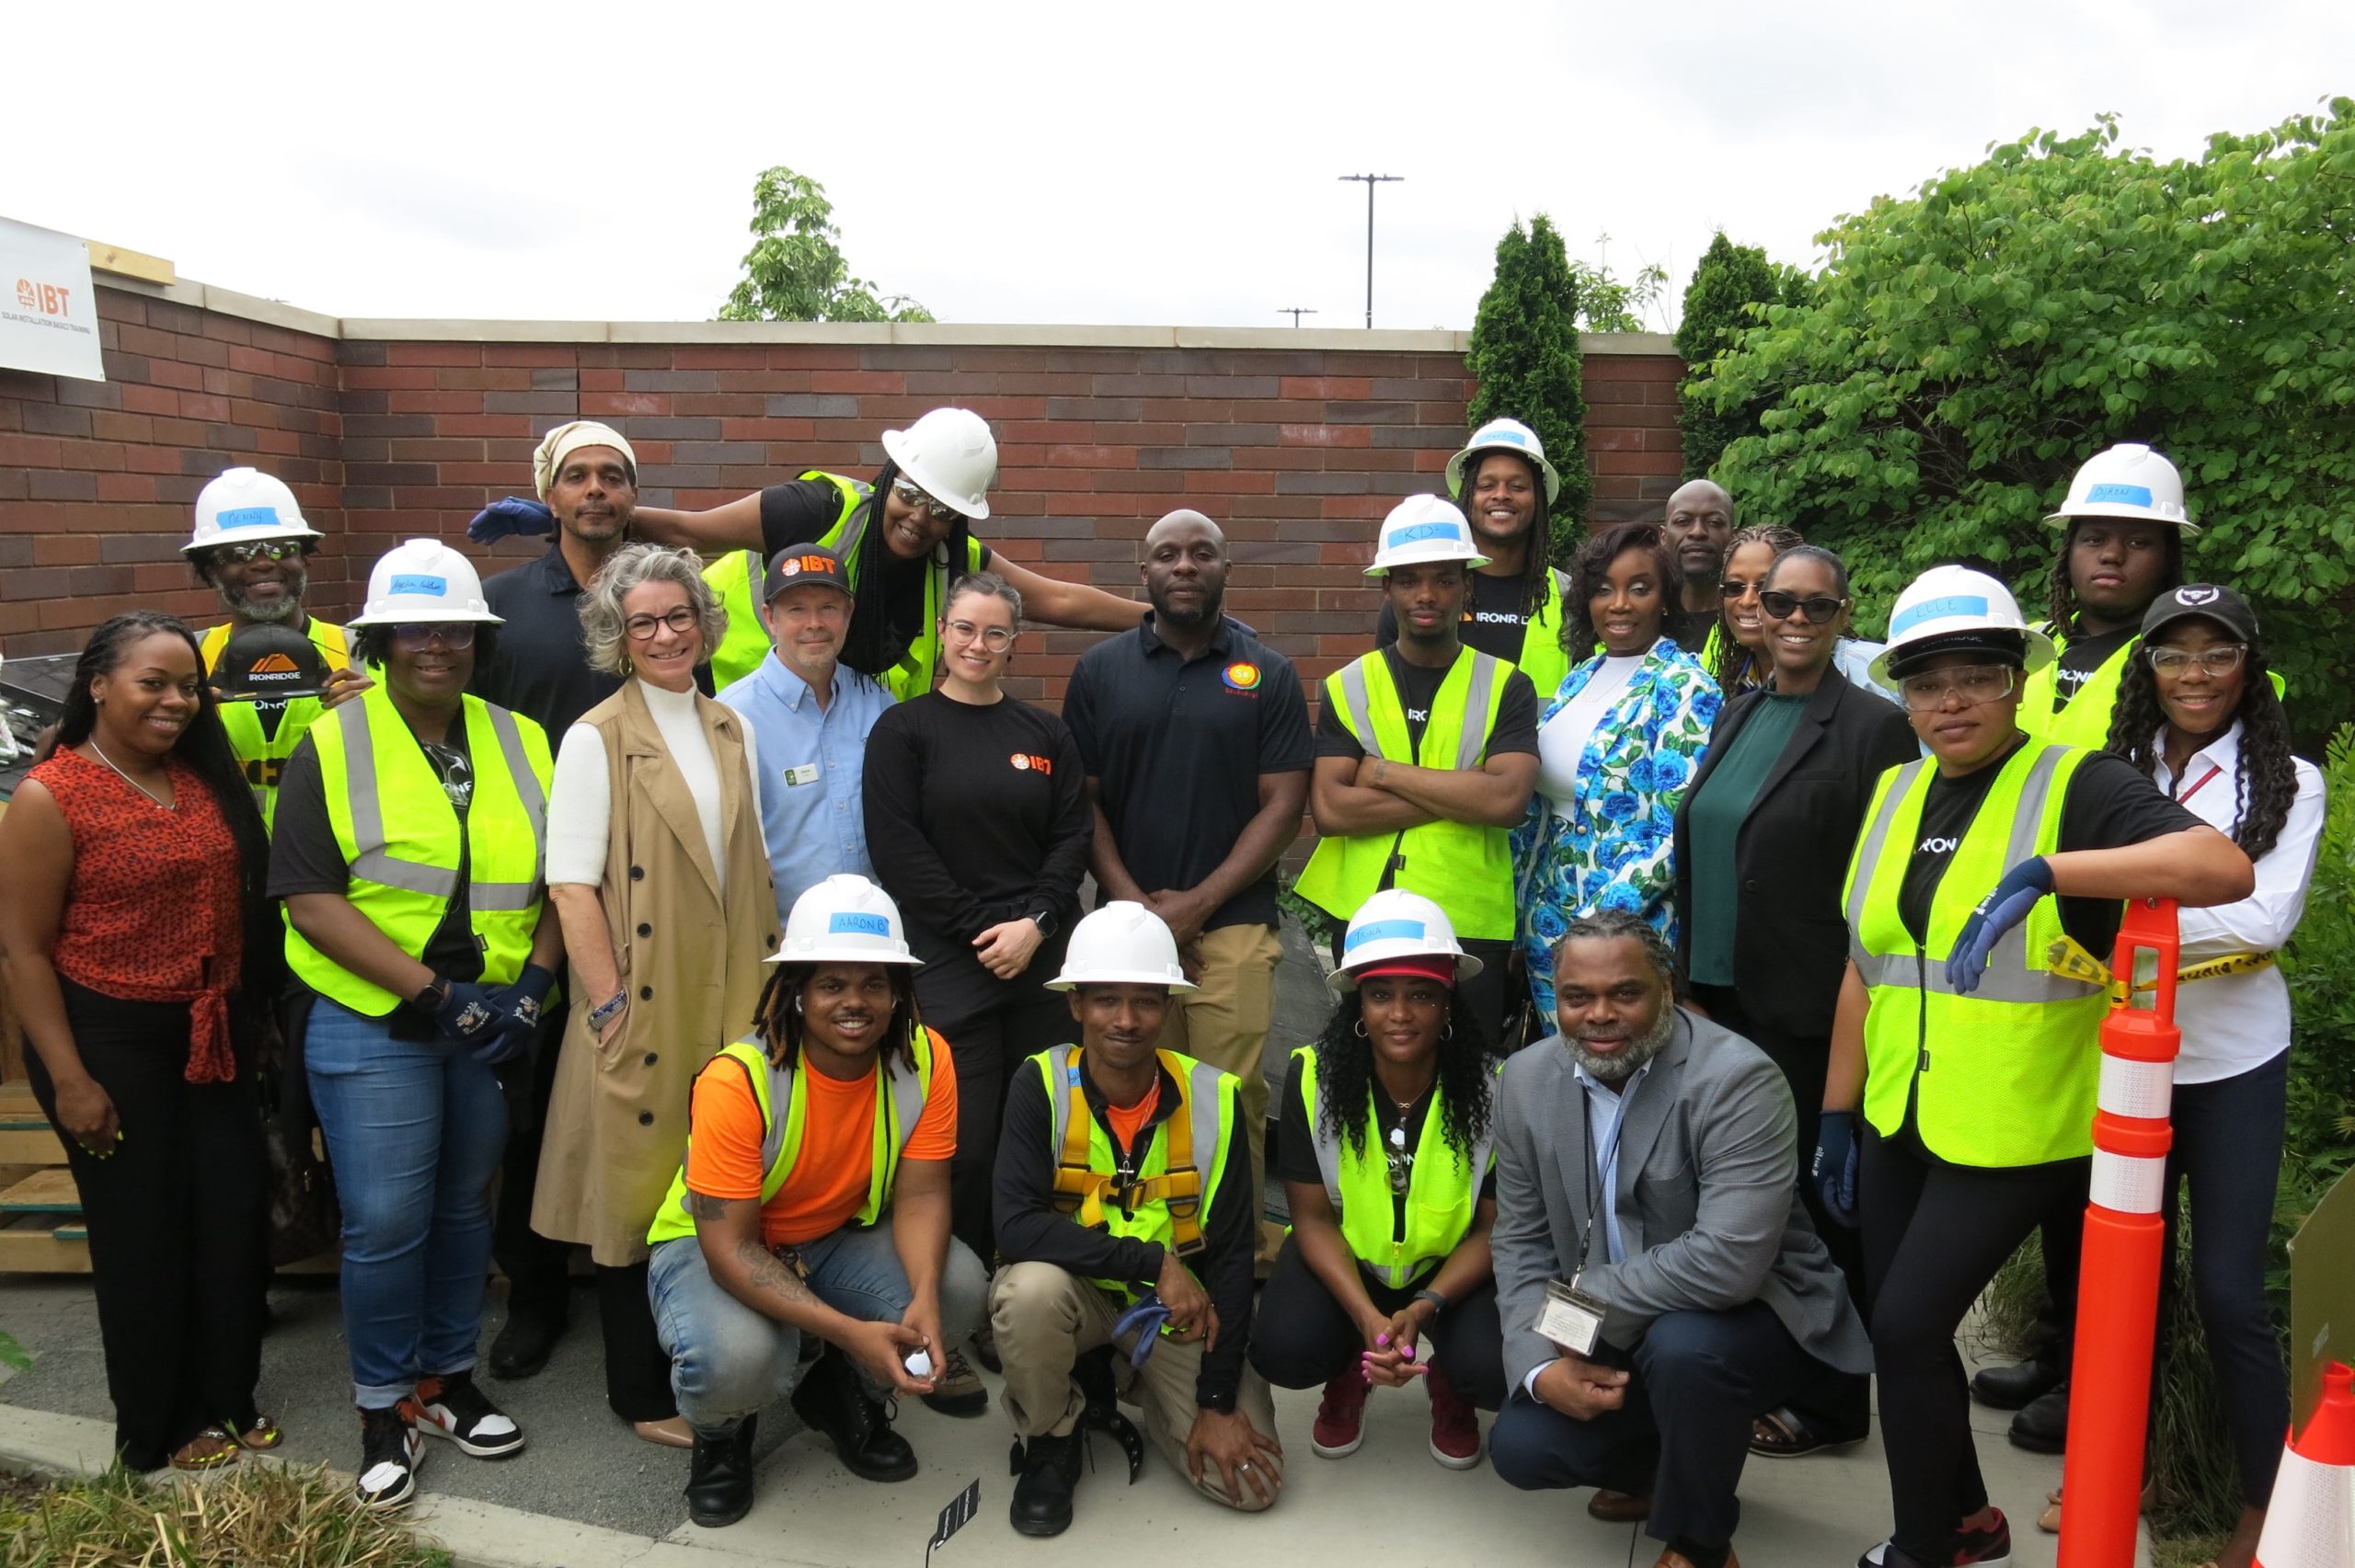 The North Lawndale Community Clean Energy Workforce Training Program